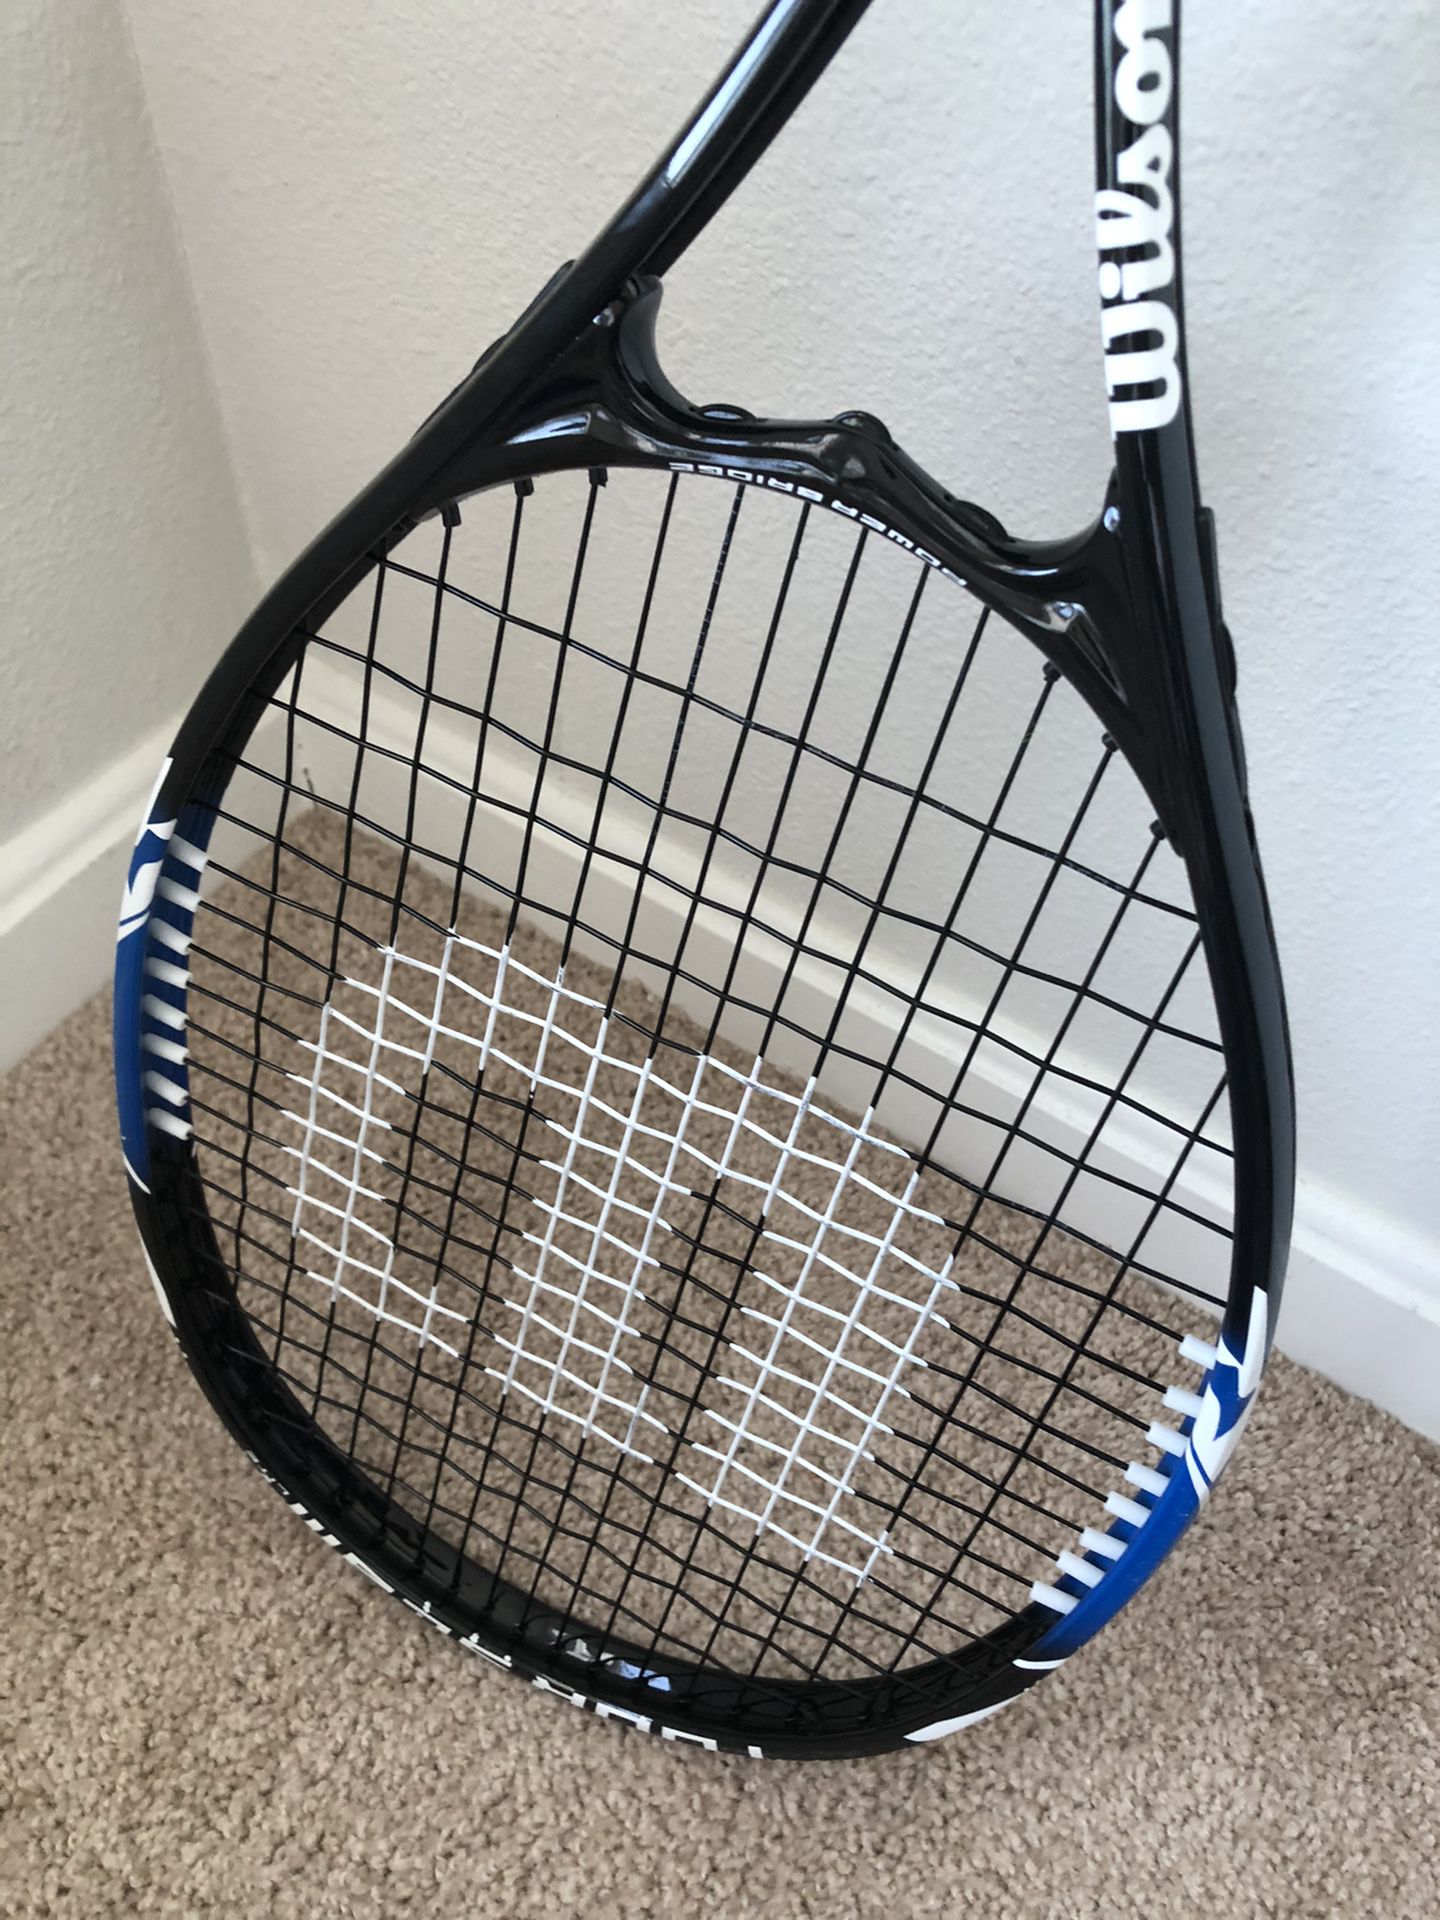 Racket Tennis